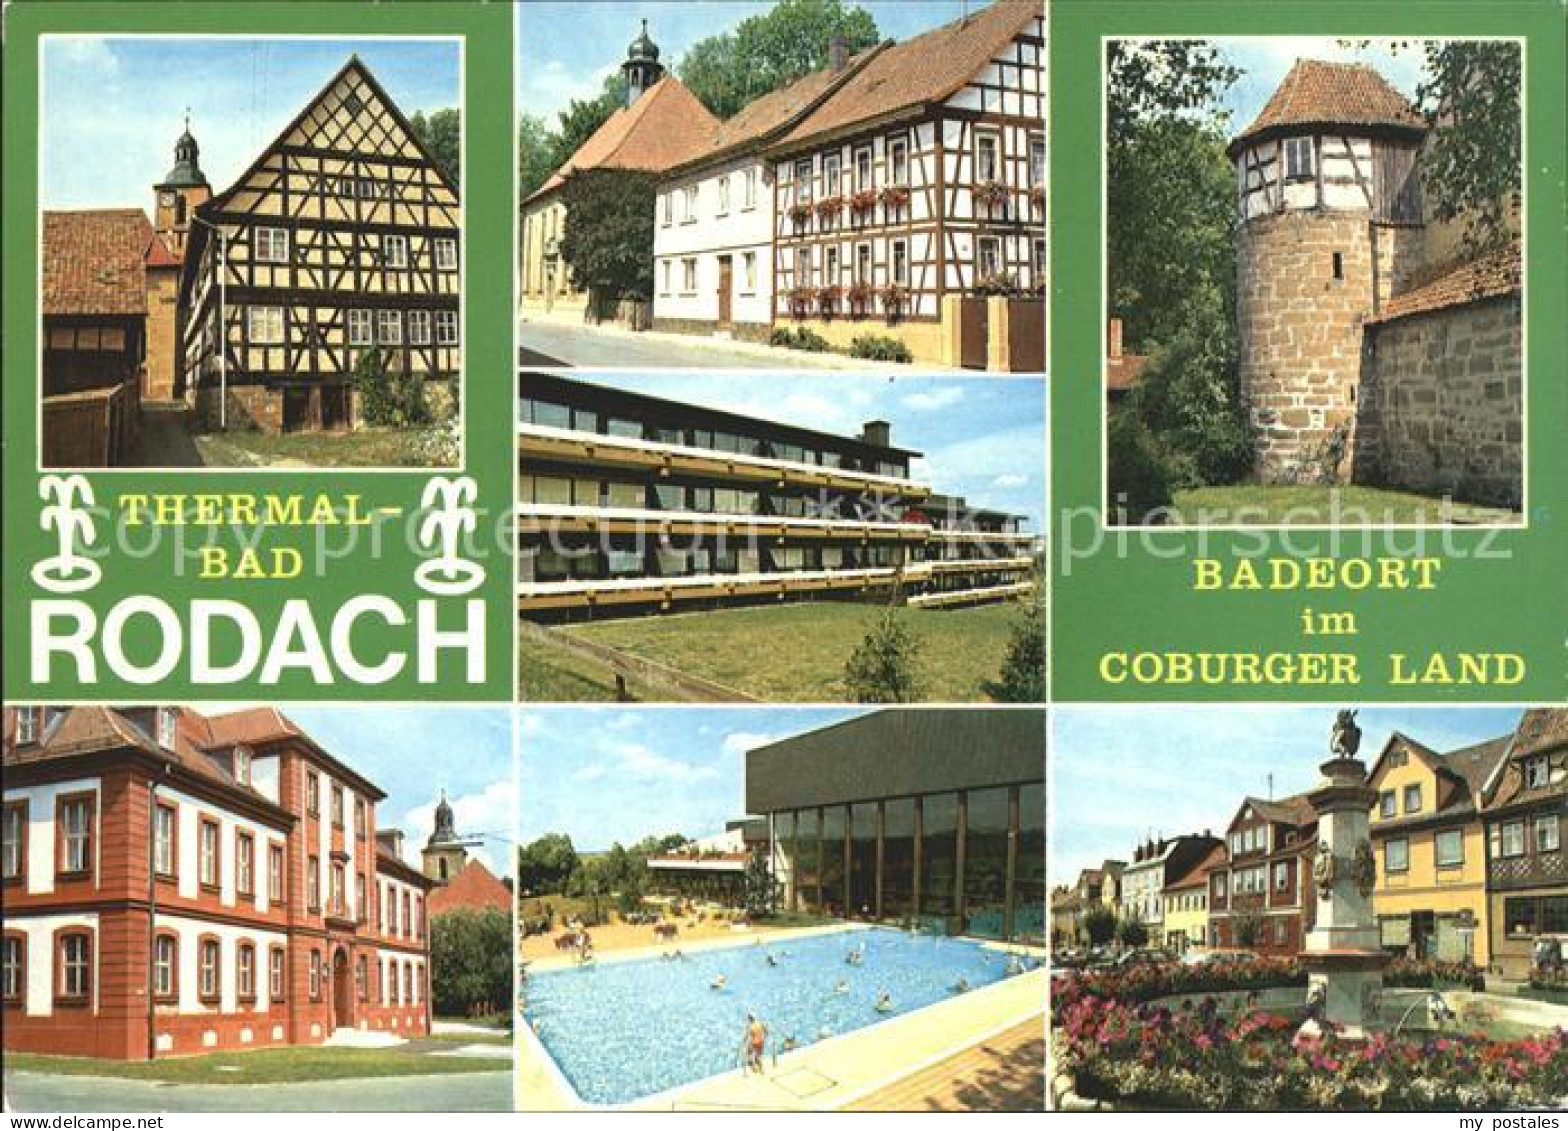 72007541 Rodach Bad Thermalbad Fachwerkhaus Schwimmbad Marktbrunnen Turm Bad Rod - Bad Rodach